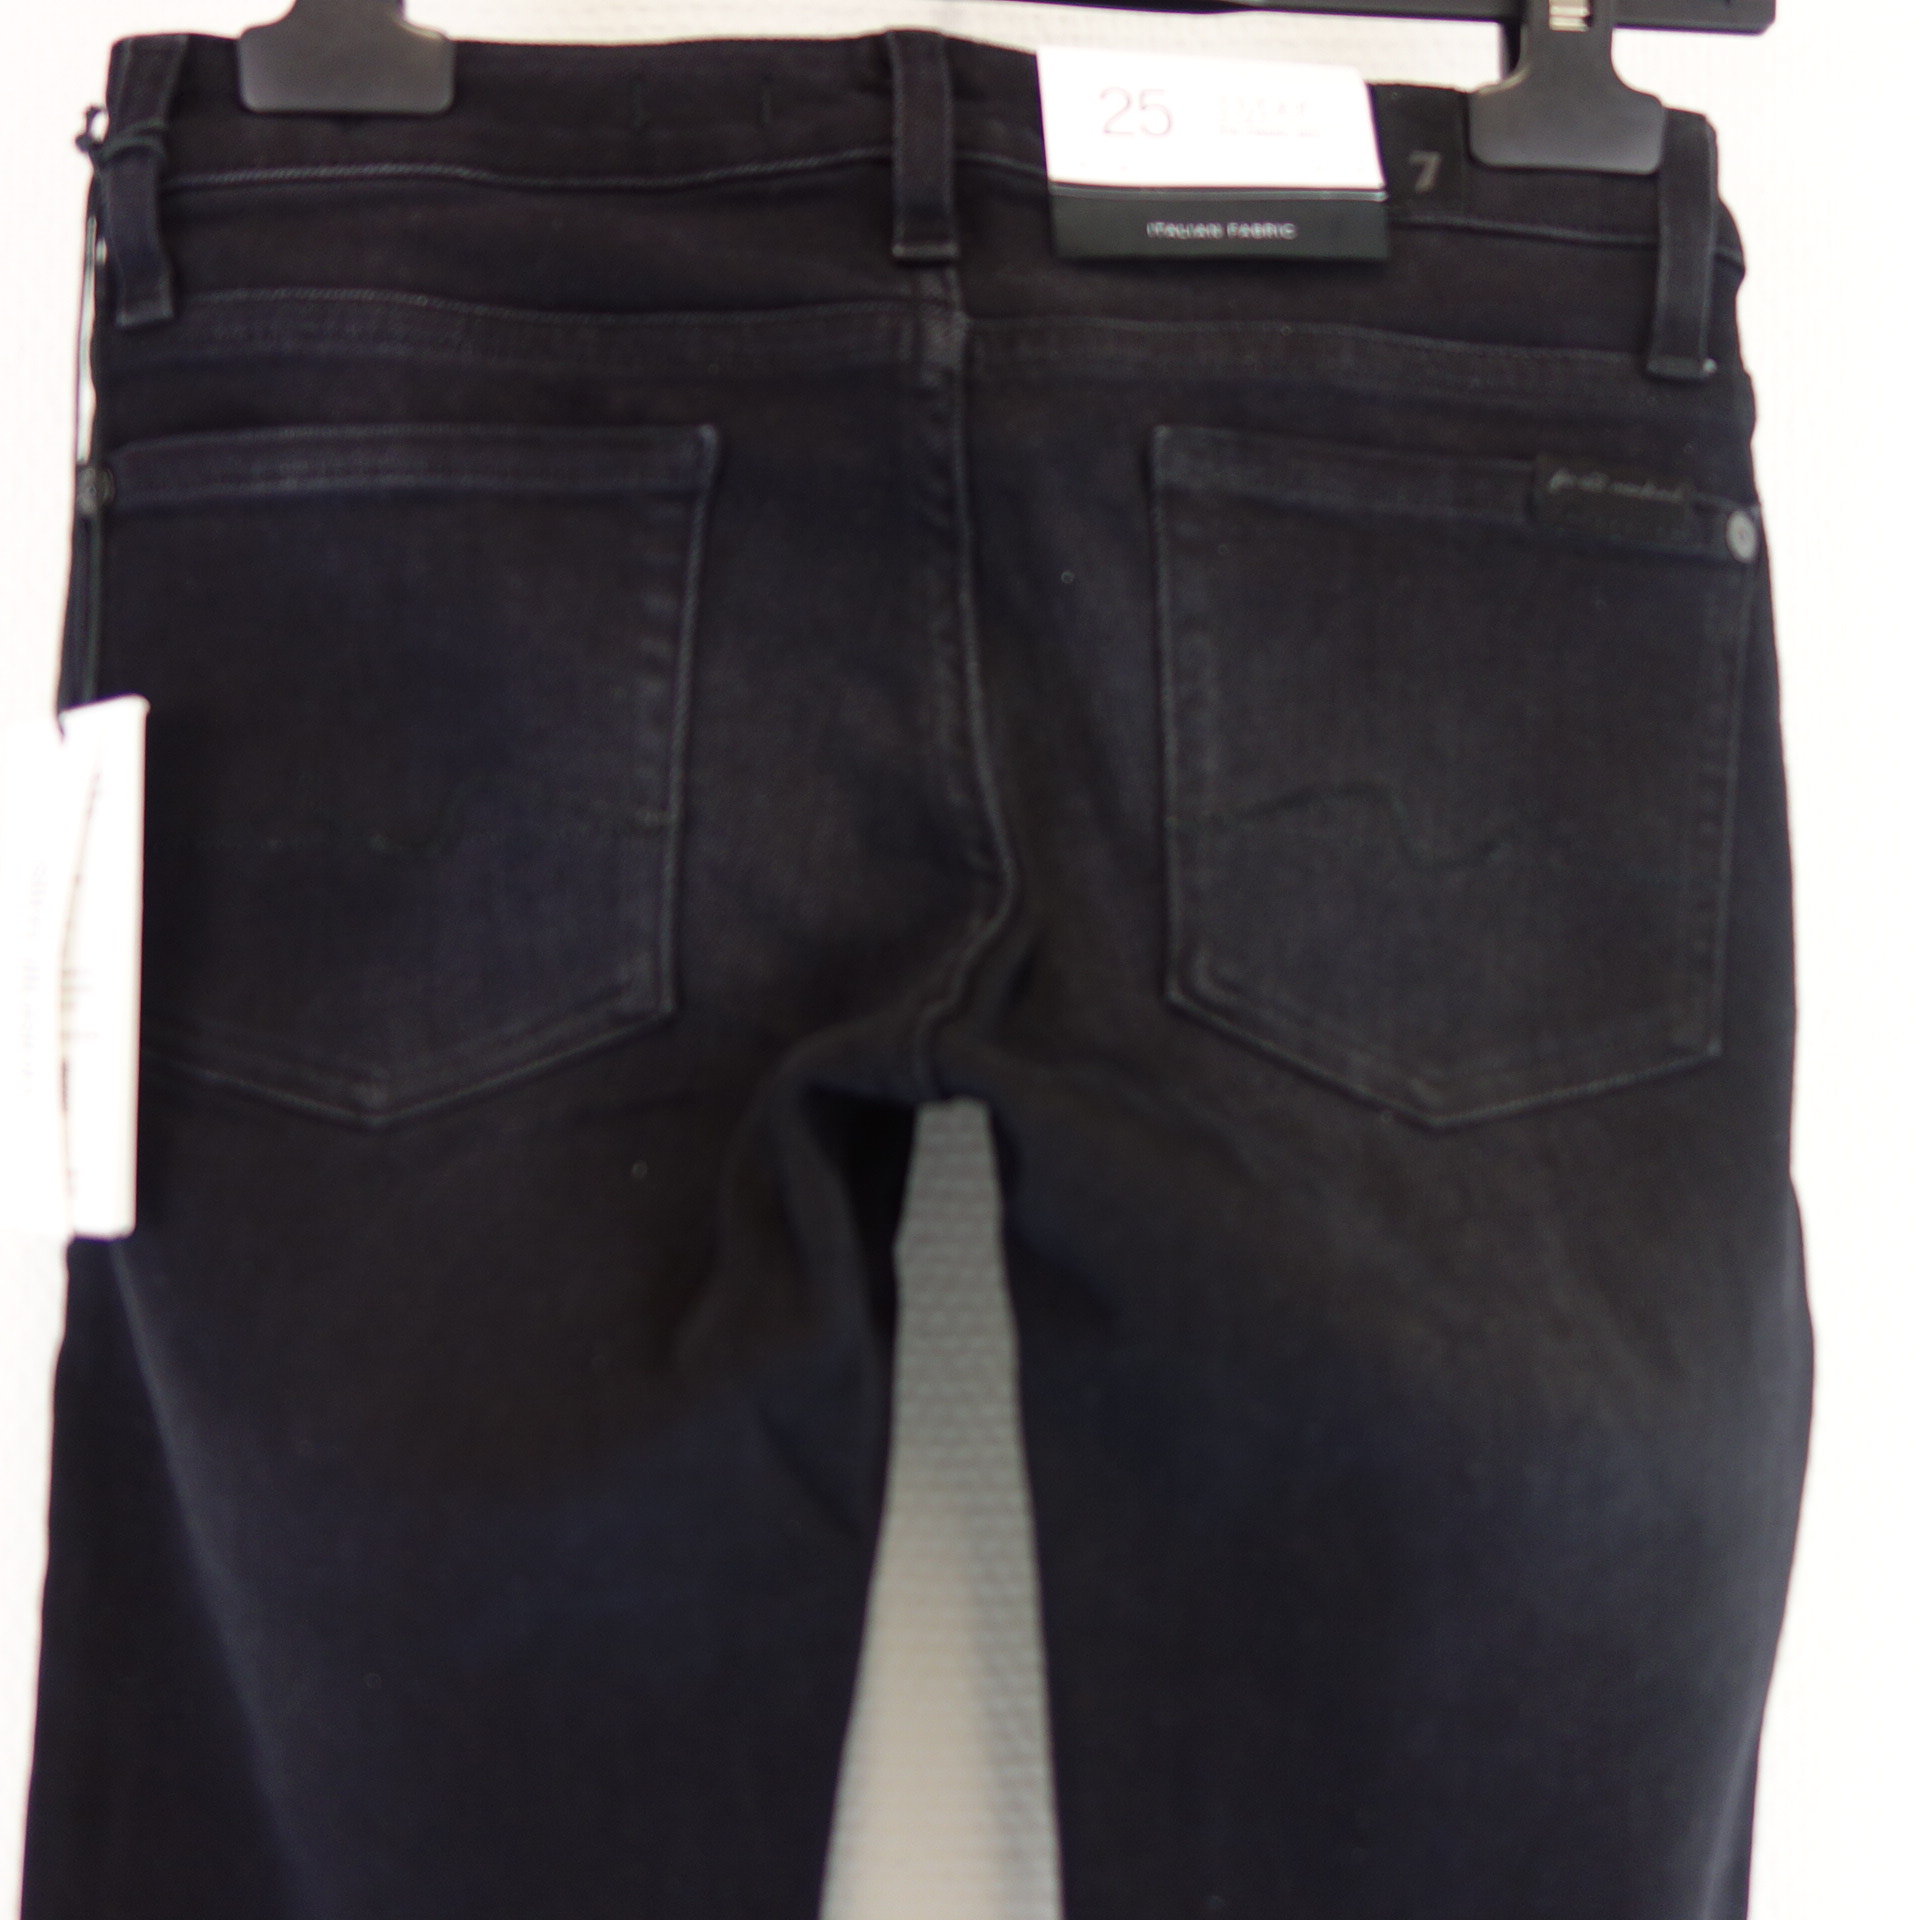 7 FOR ALL MANKIND Damen Jeans Hose Jeanshose Modell PYPER Schwarz Classic Slim